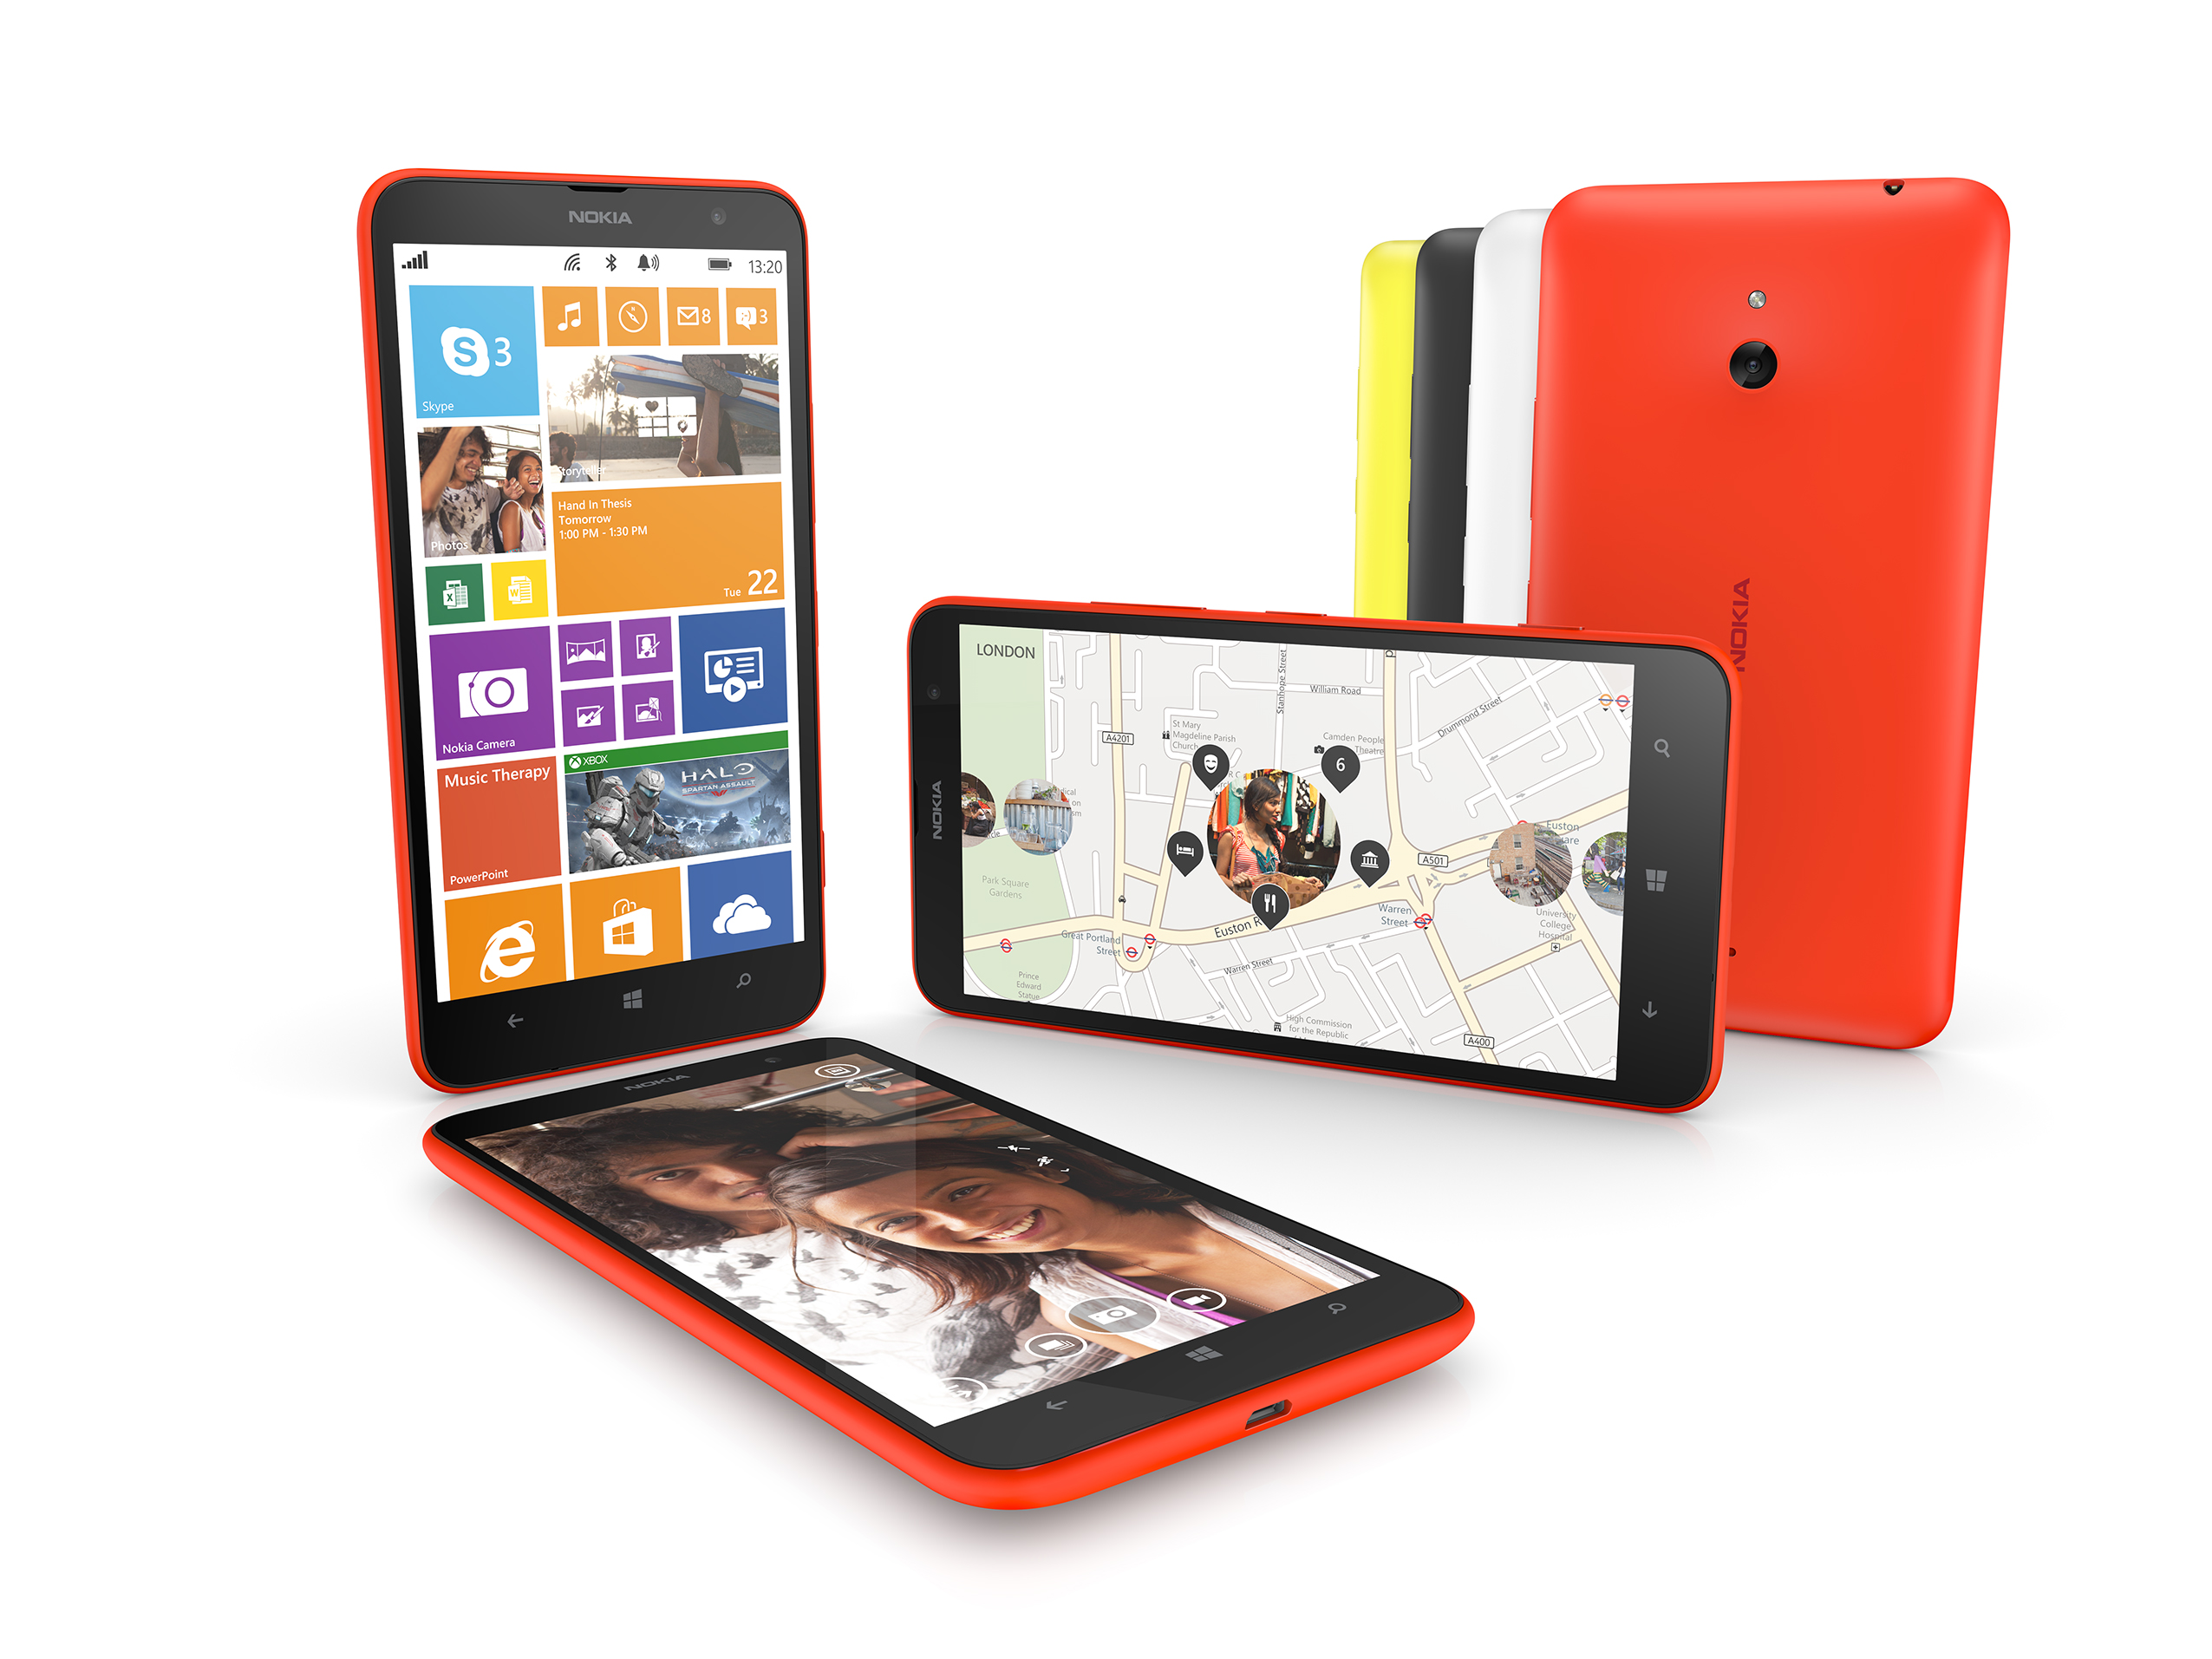 Telefony Lumia pod marką Microsoftu